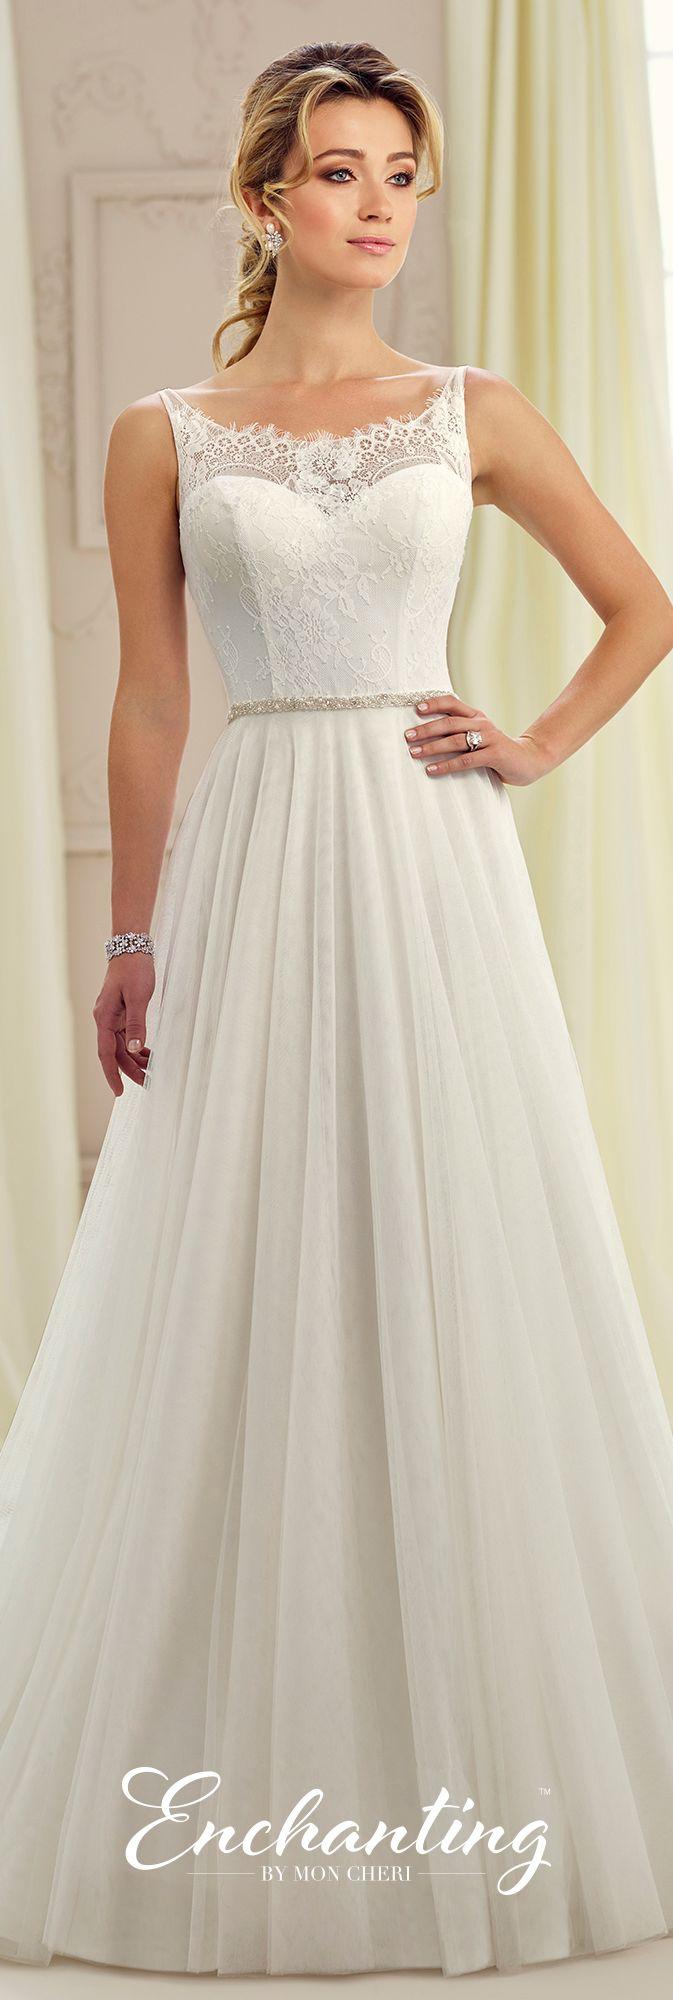 زفاف - Sleeveless Lace A-Line Wedding Gown - Enchanting By Mon Cheri 217105